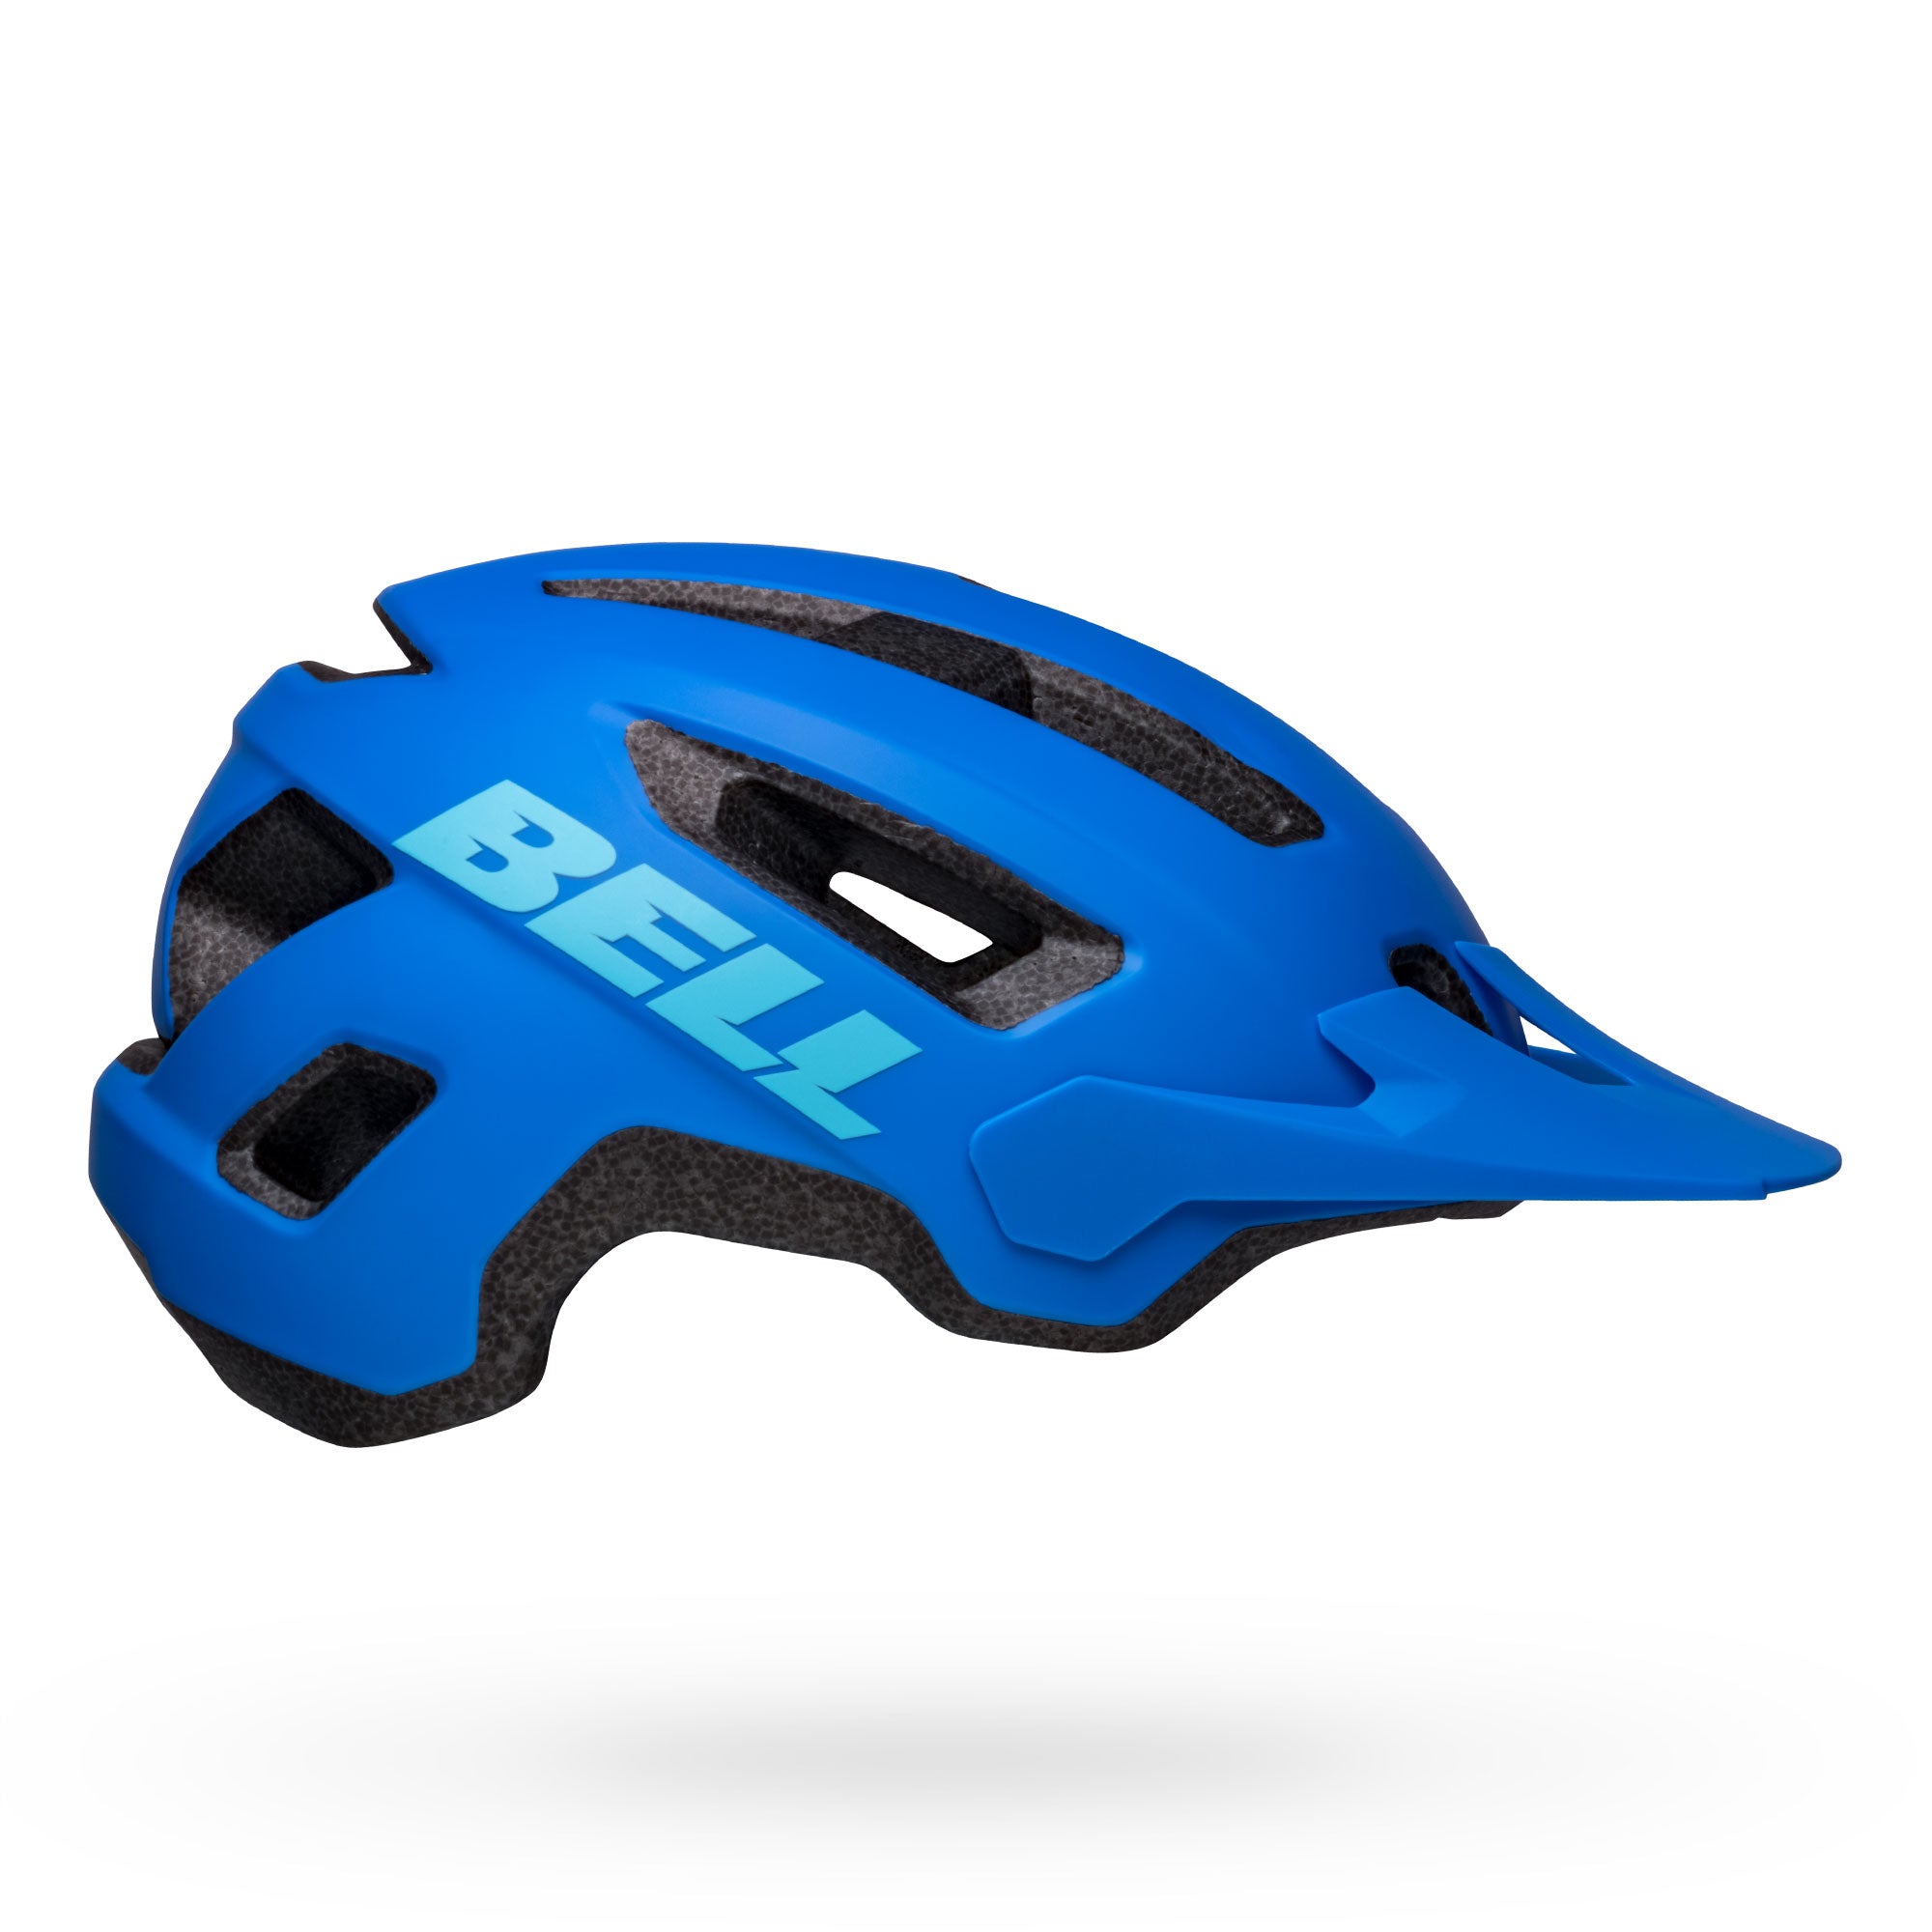 Bell Nomad 2 MIPS Helmet - Matte Dark Blue